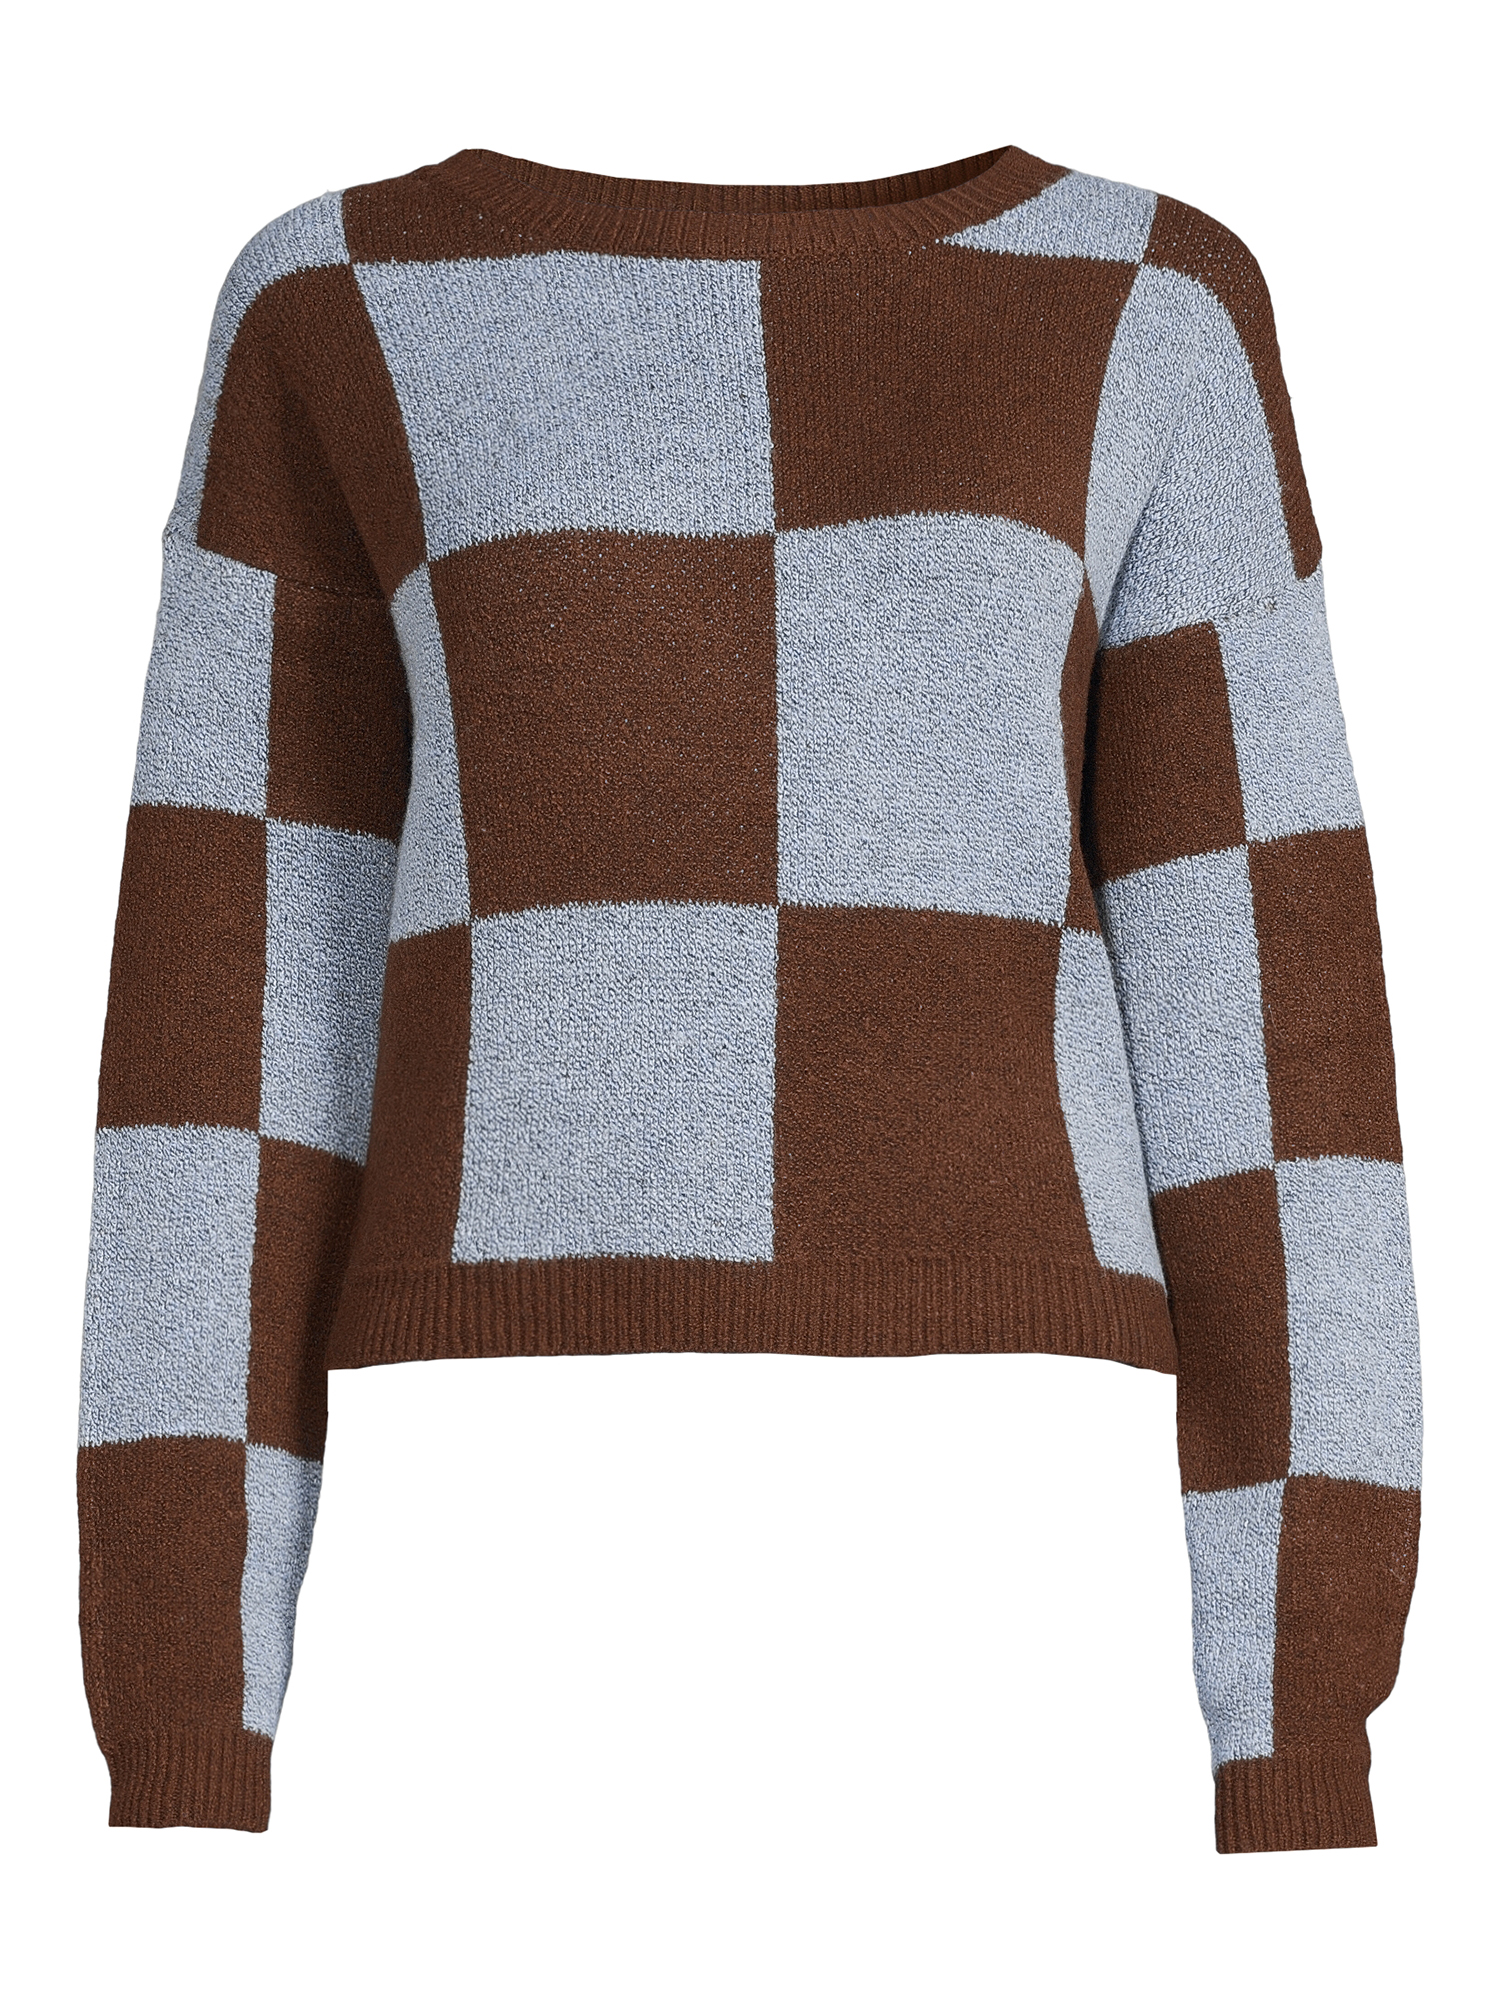 No Boundaries Junior's Jacquard Pullover Sweater - image 5 of 5